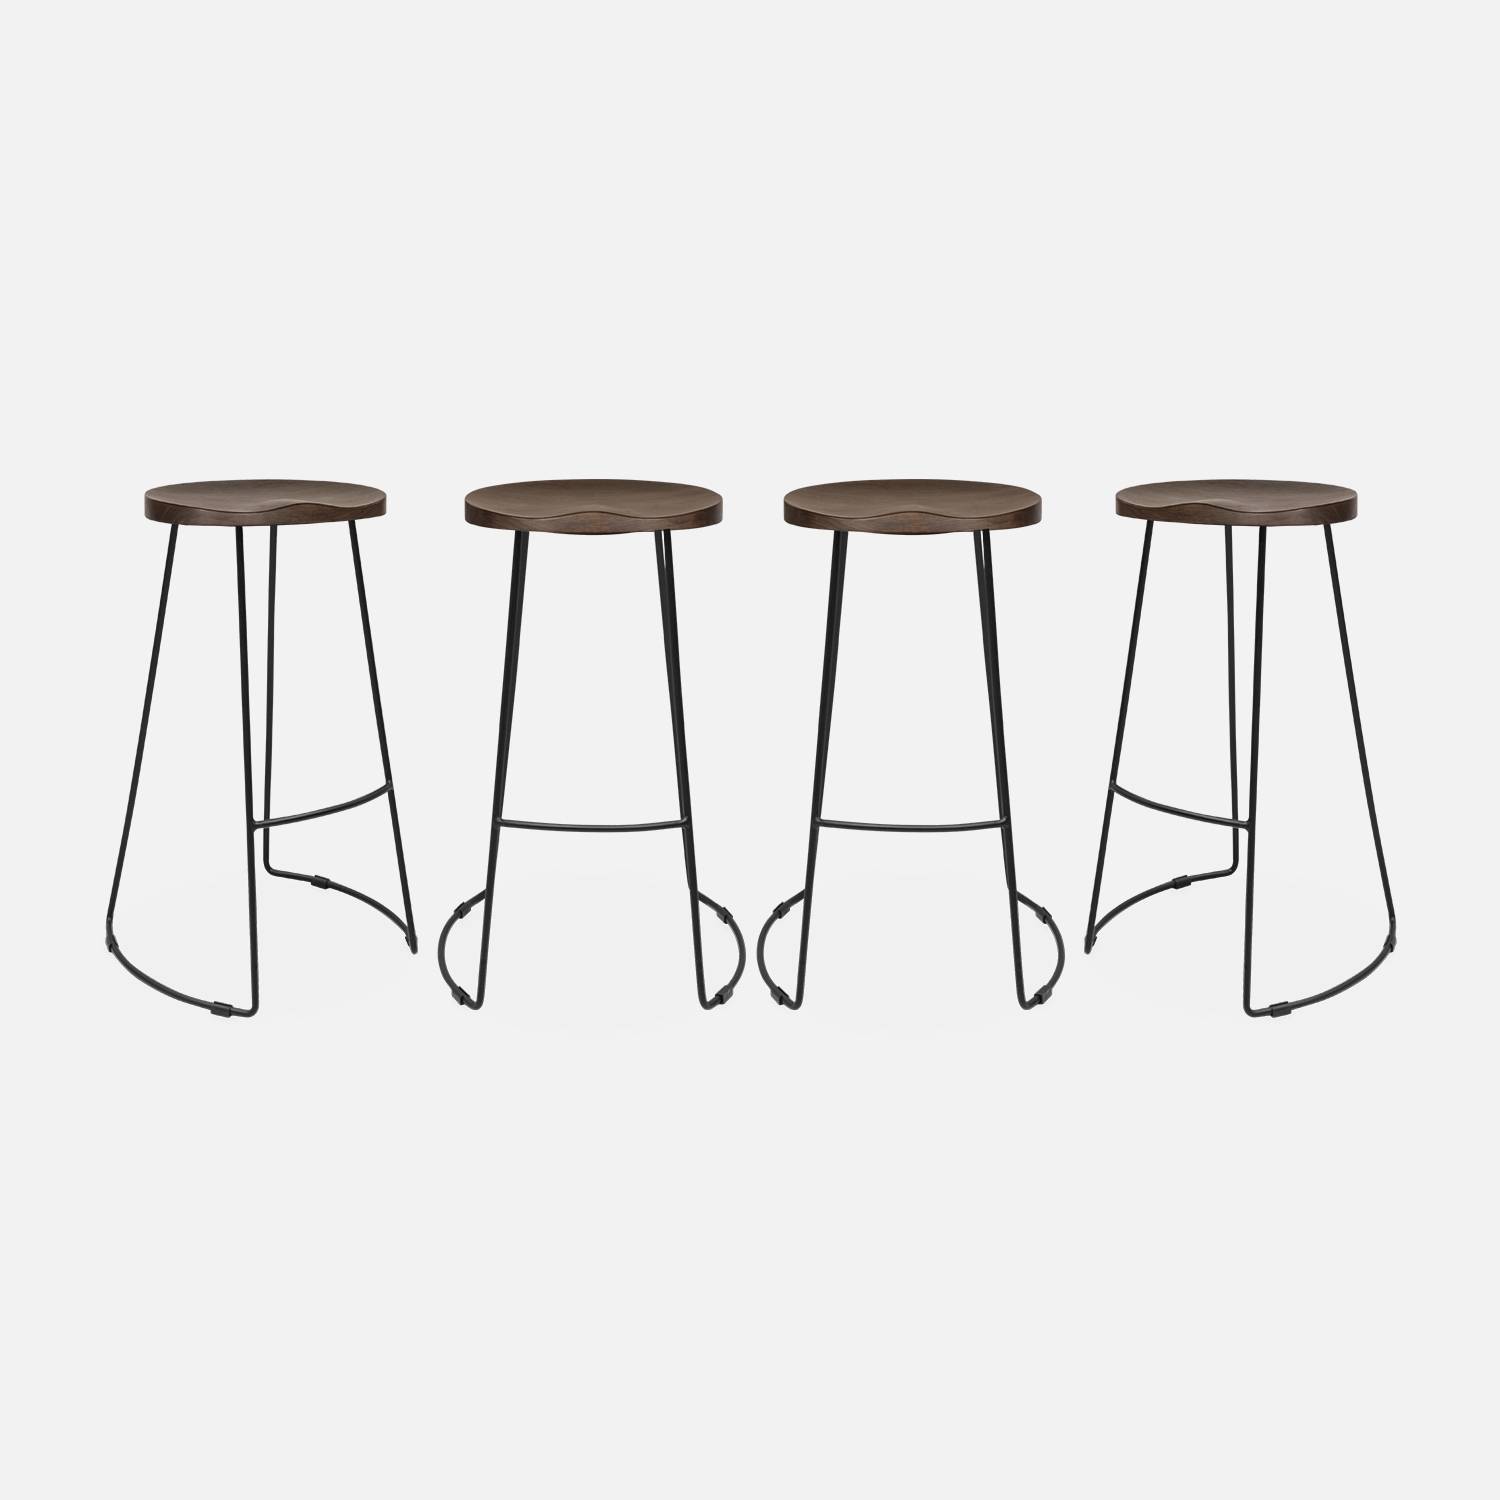 Set of 4 industrial metal and wooden bar stools, 47x40x75cm, Light Walnut | sweeek